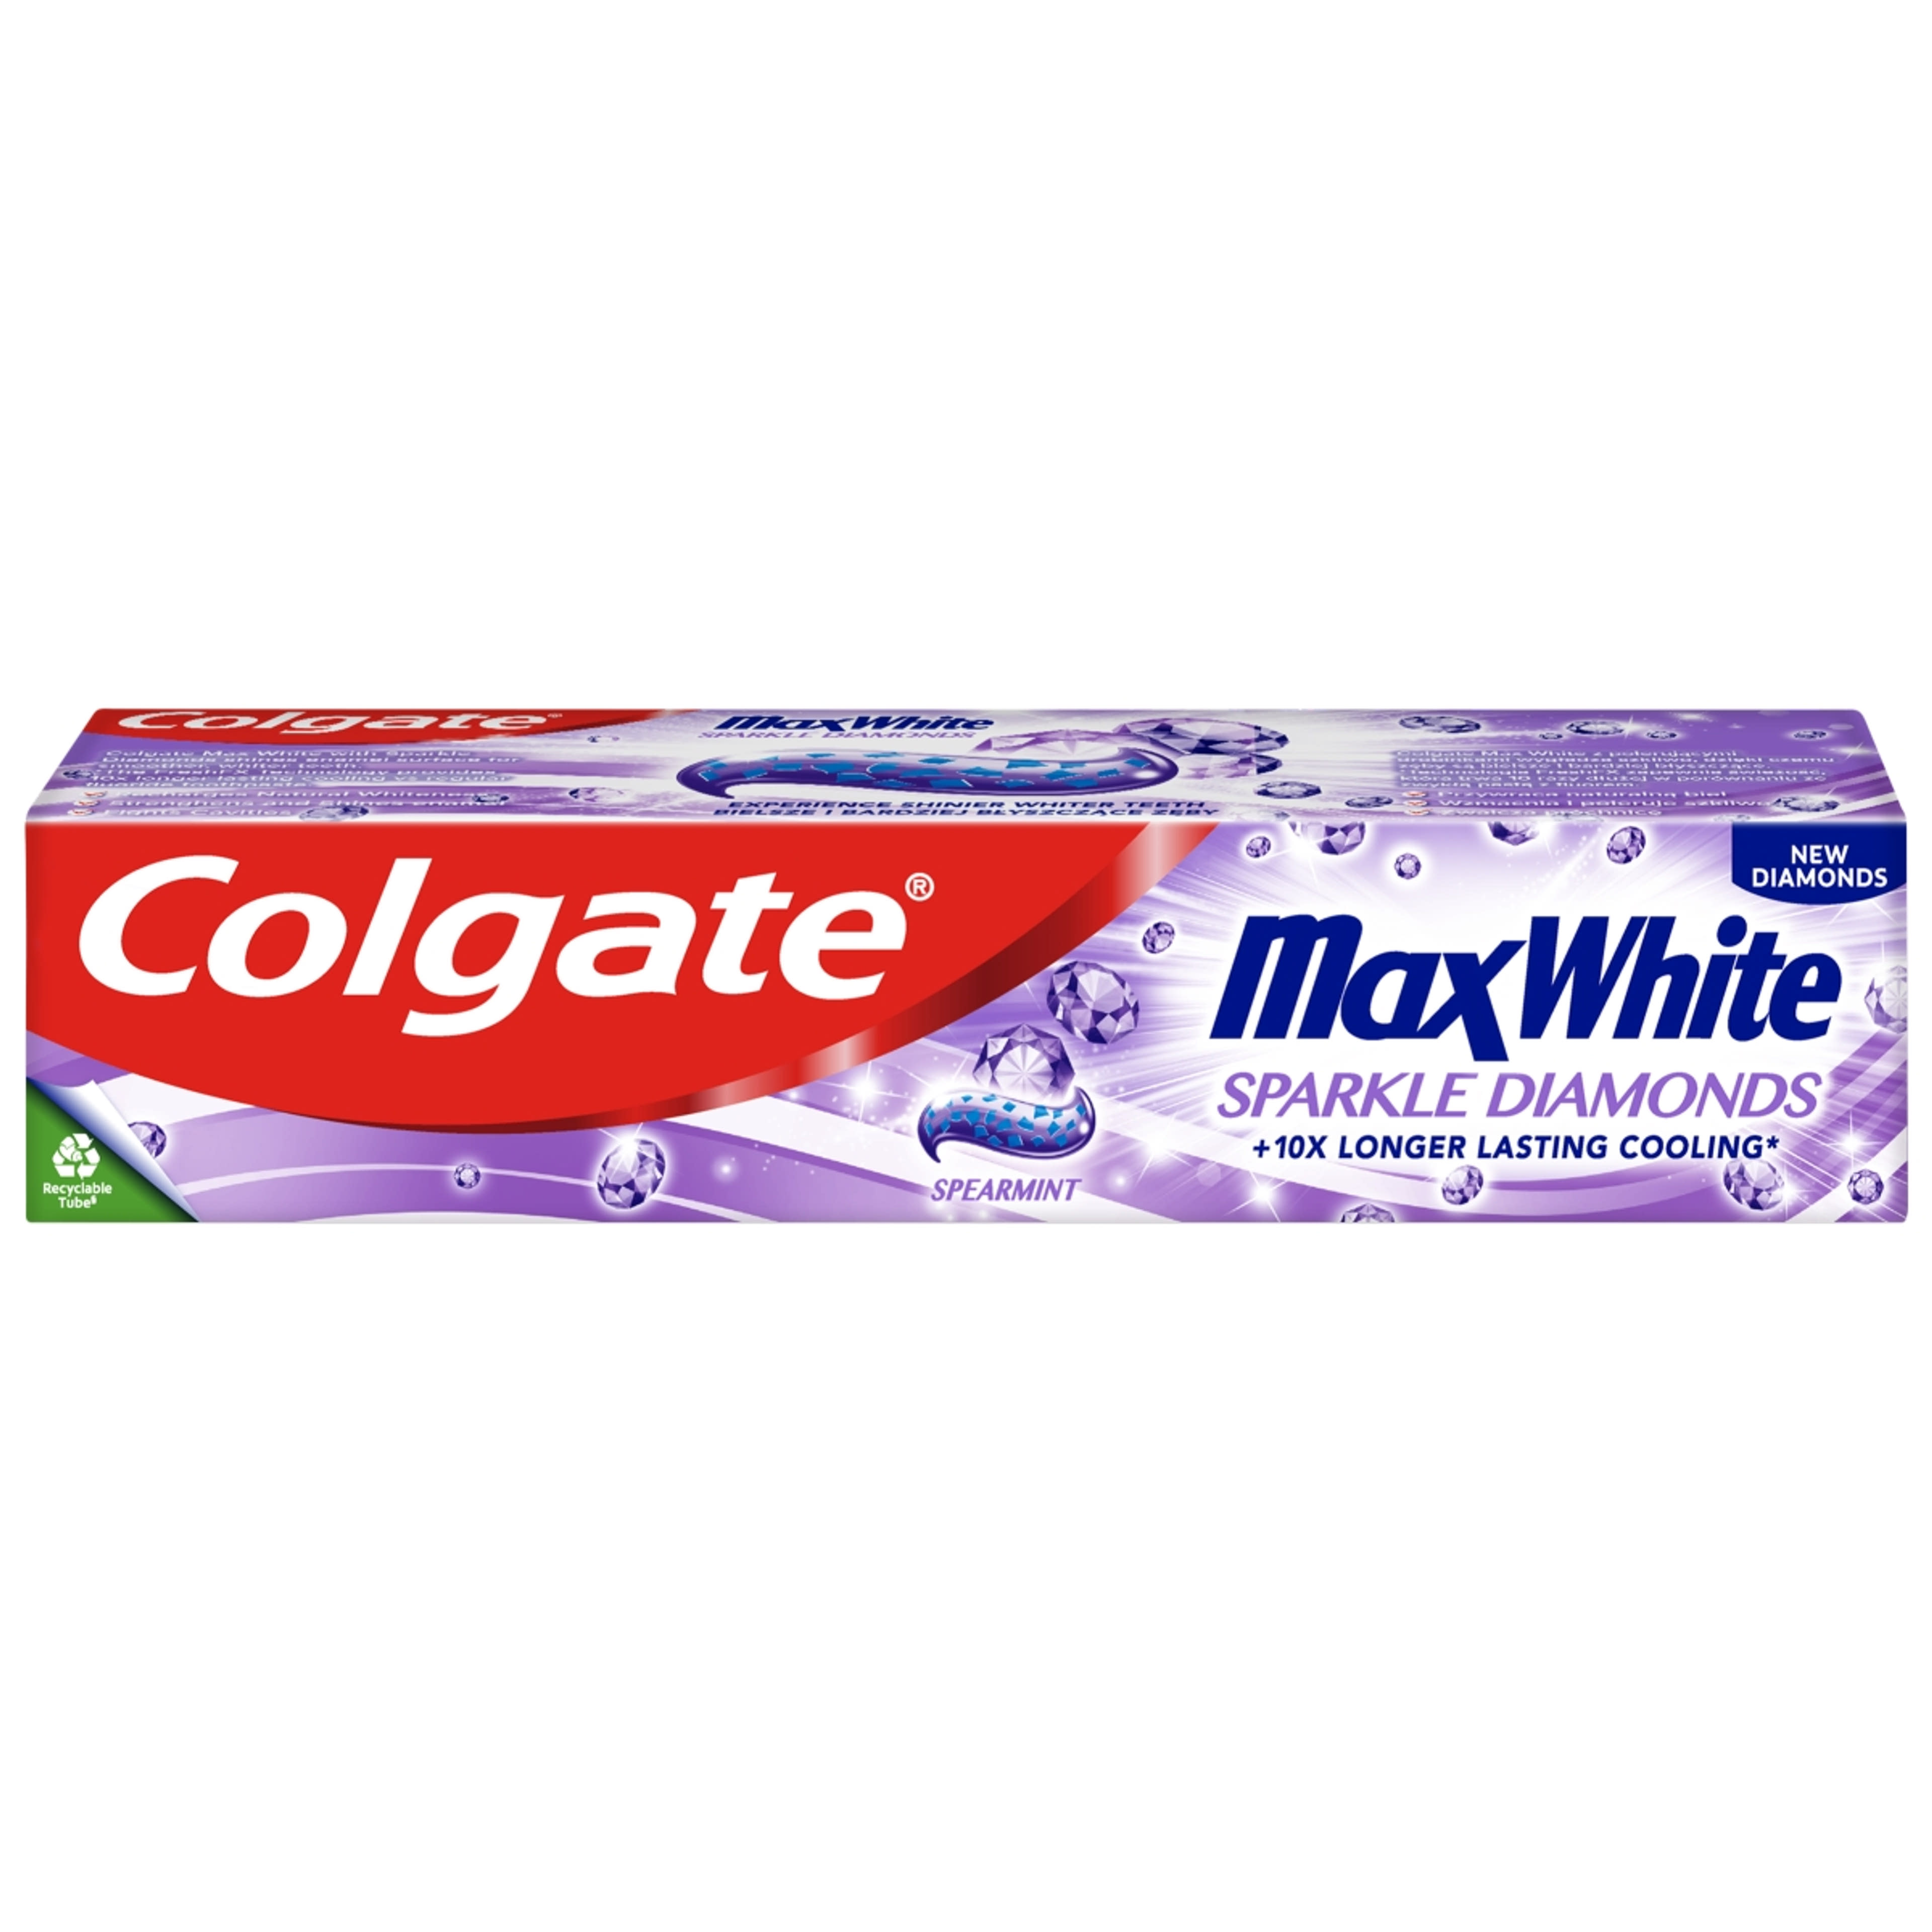 Colgate Max White Sparkle Diamonds fogkrém - 75 ml-1